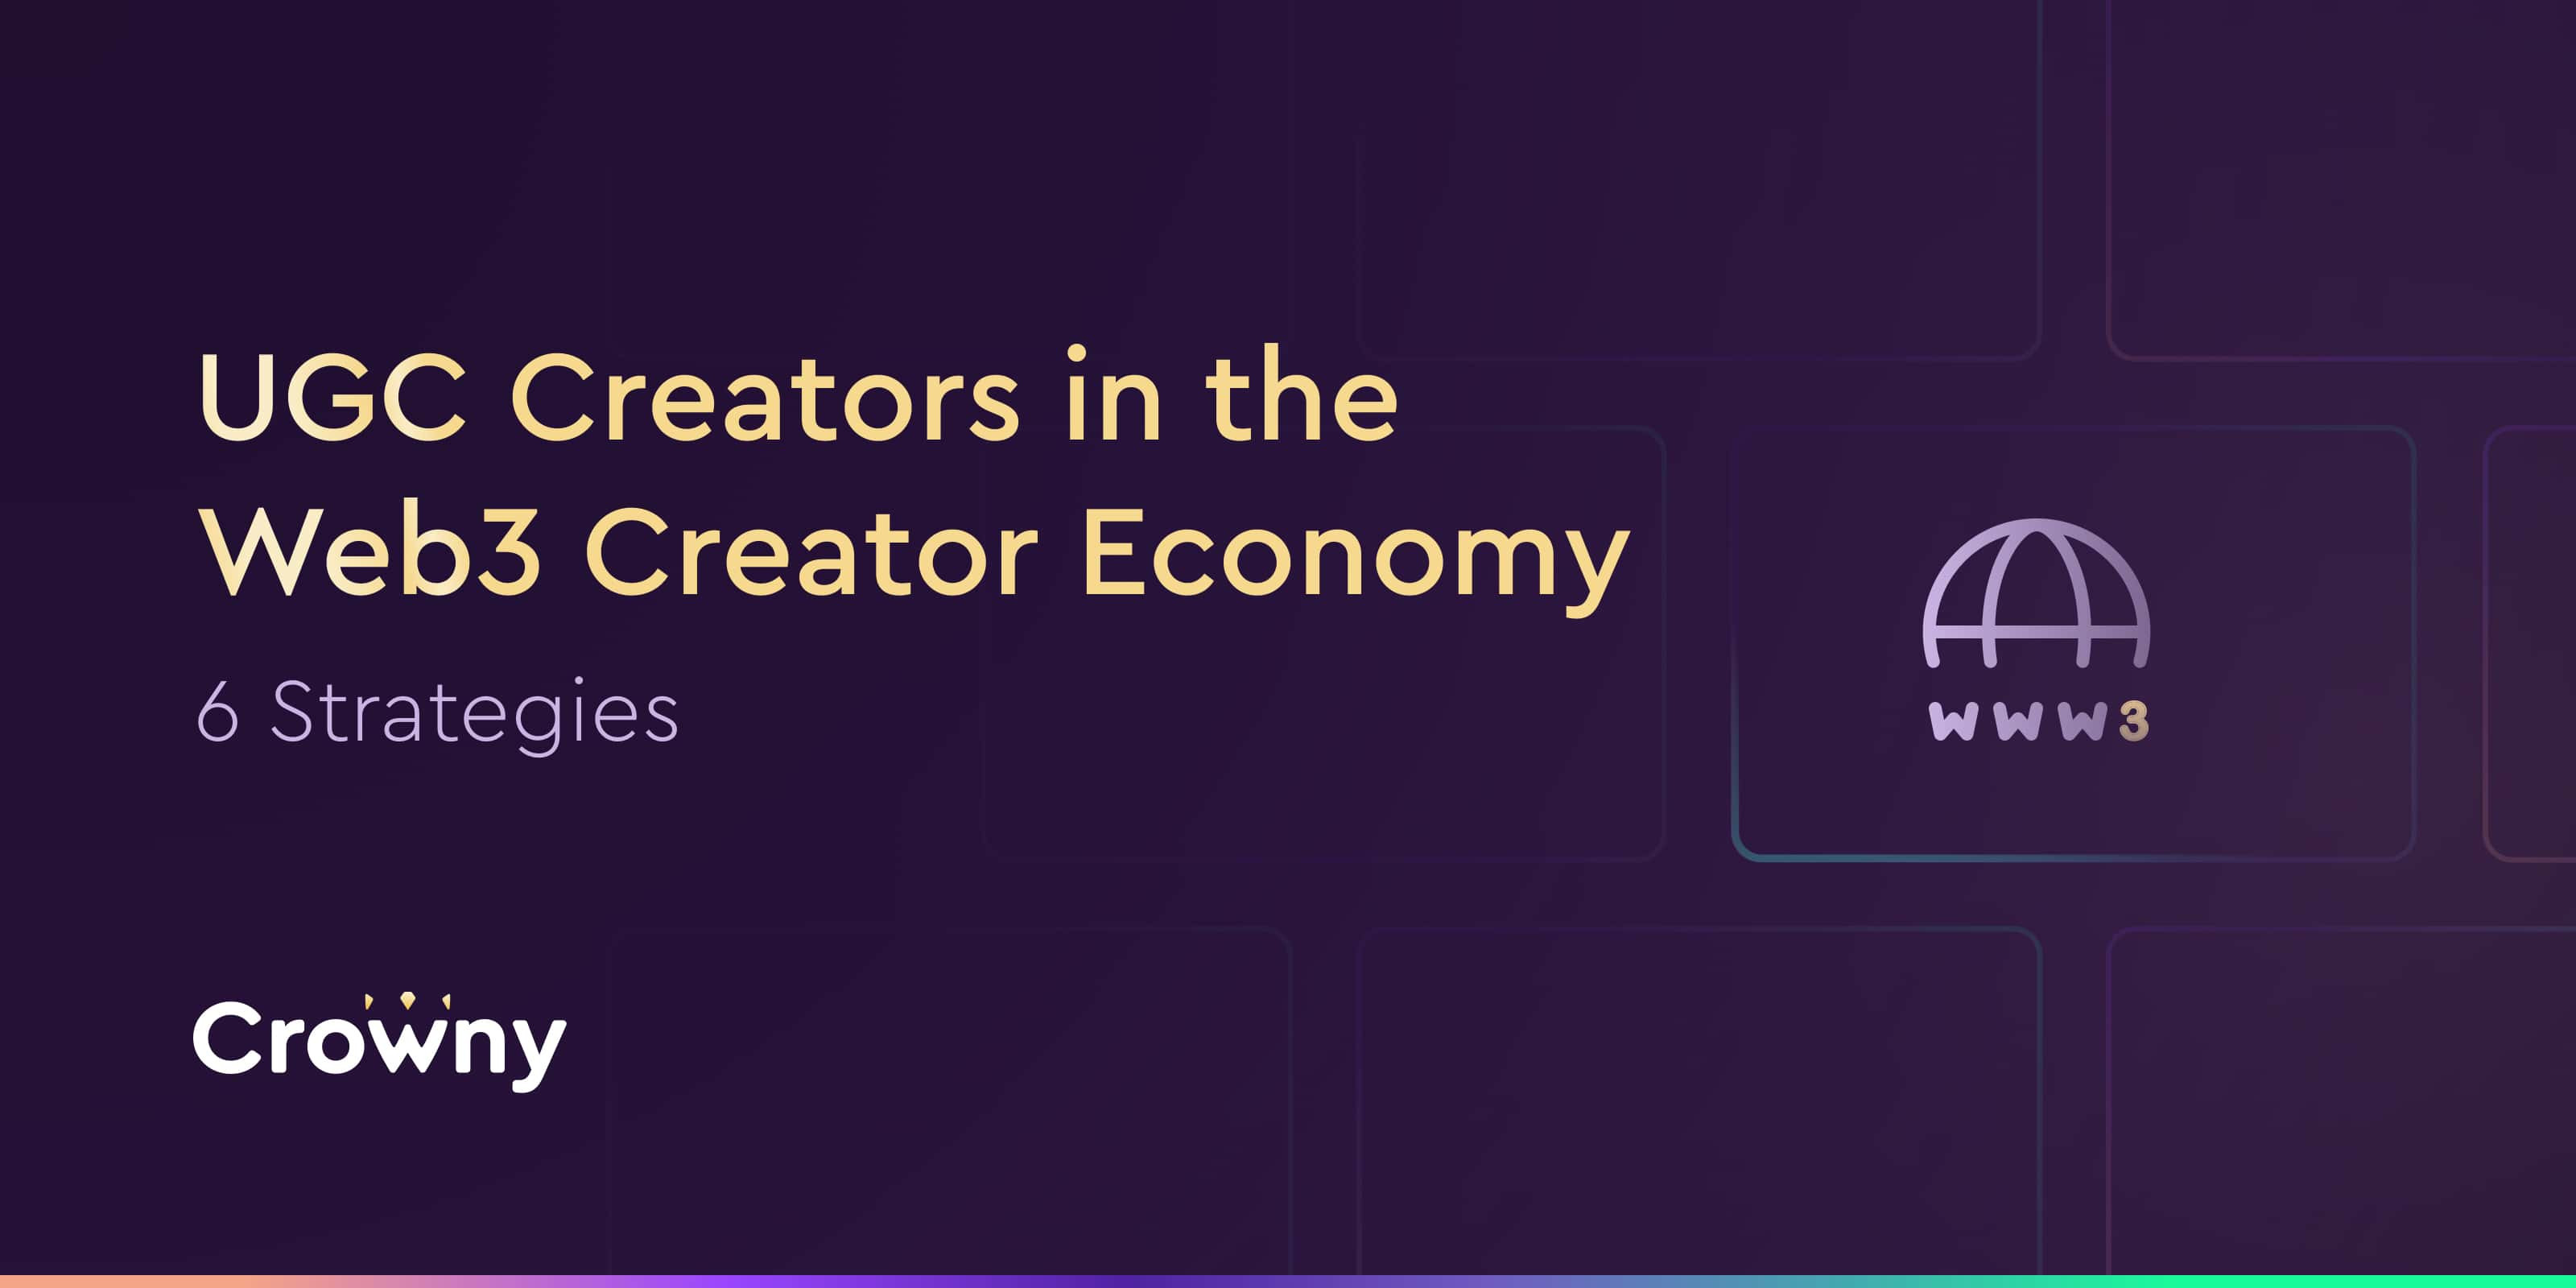 6 Strategies to Get UGC Creators in the Web3 Creator Economy